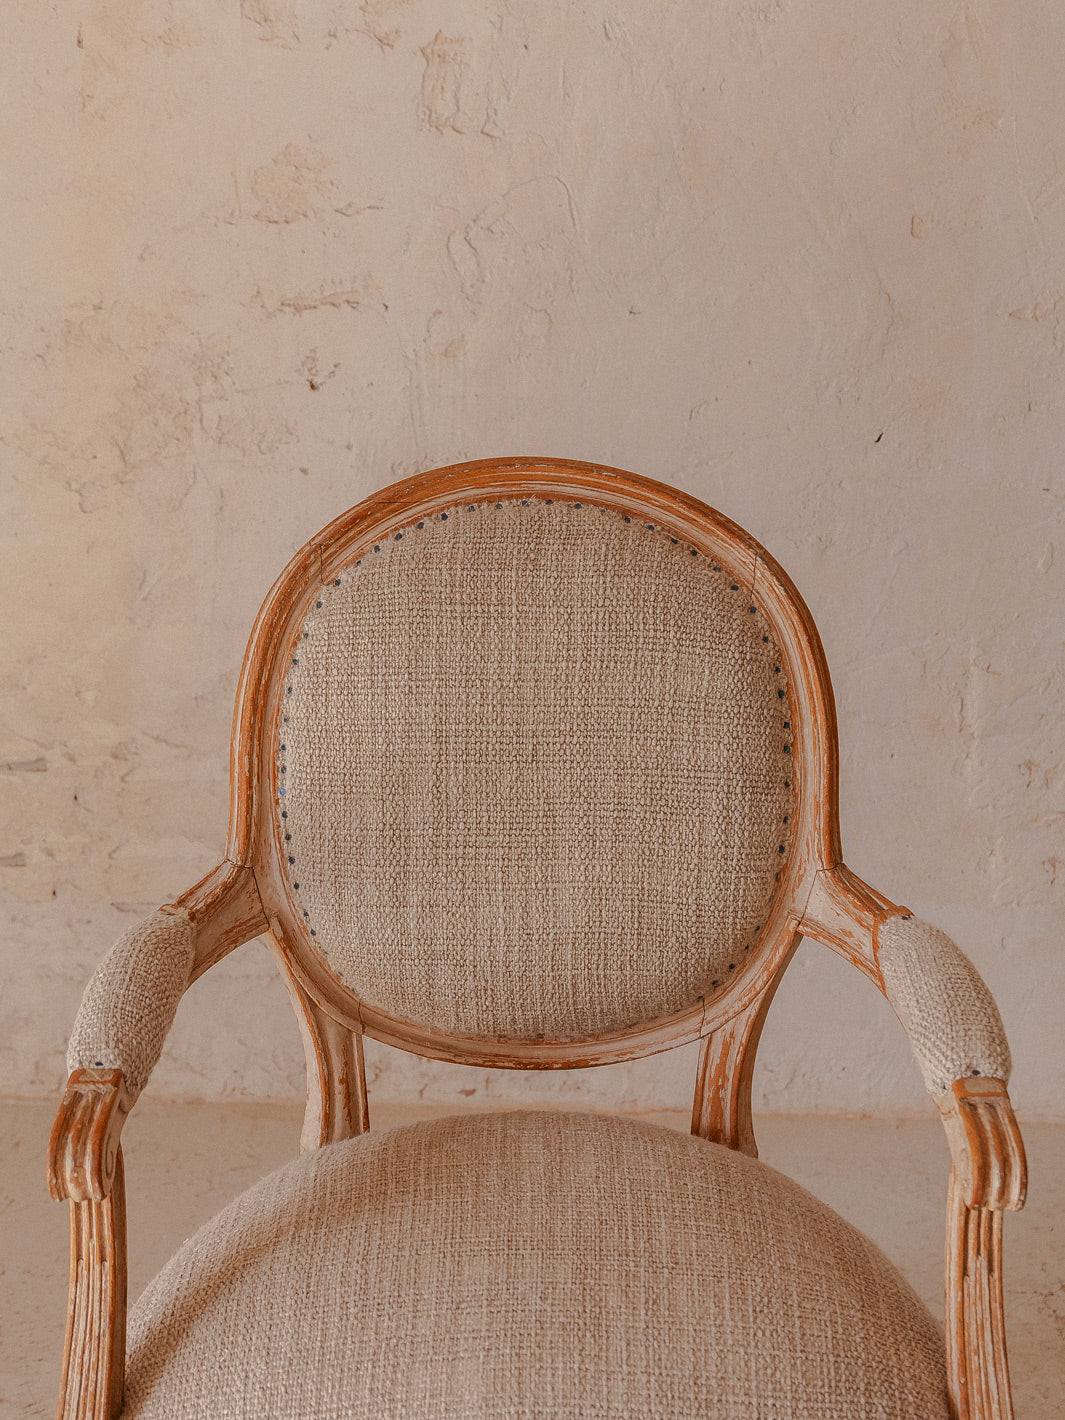 Pair of XNUMXth century Gustavian armchairs